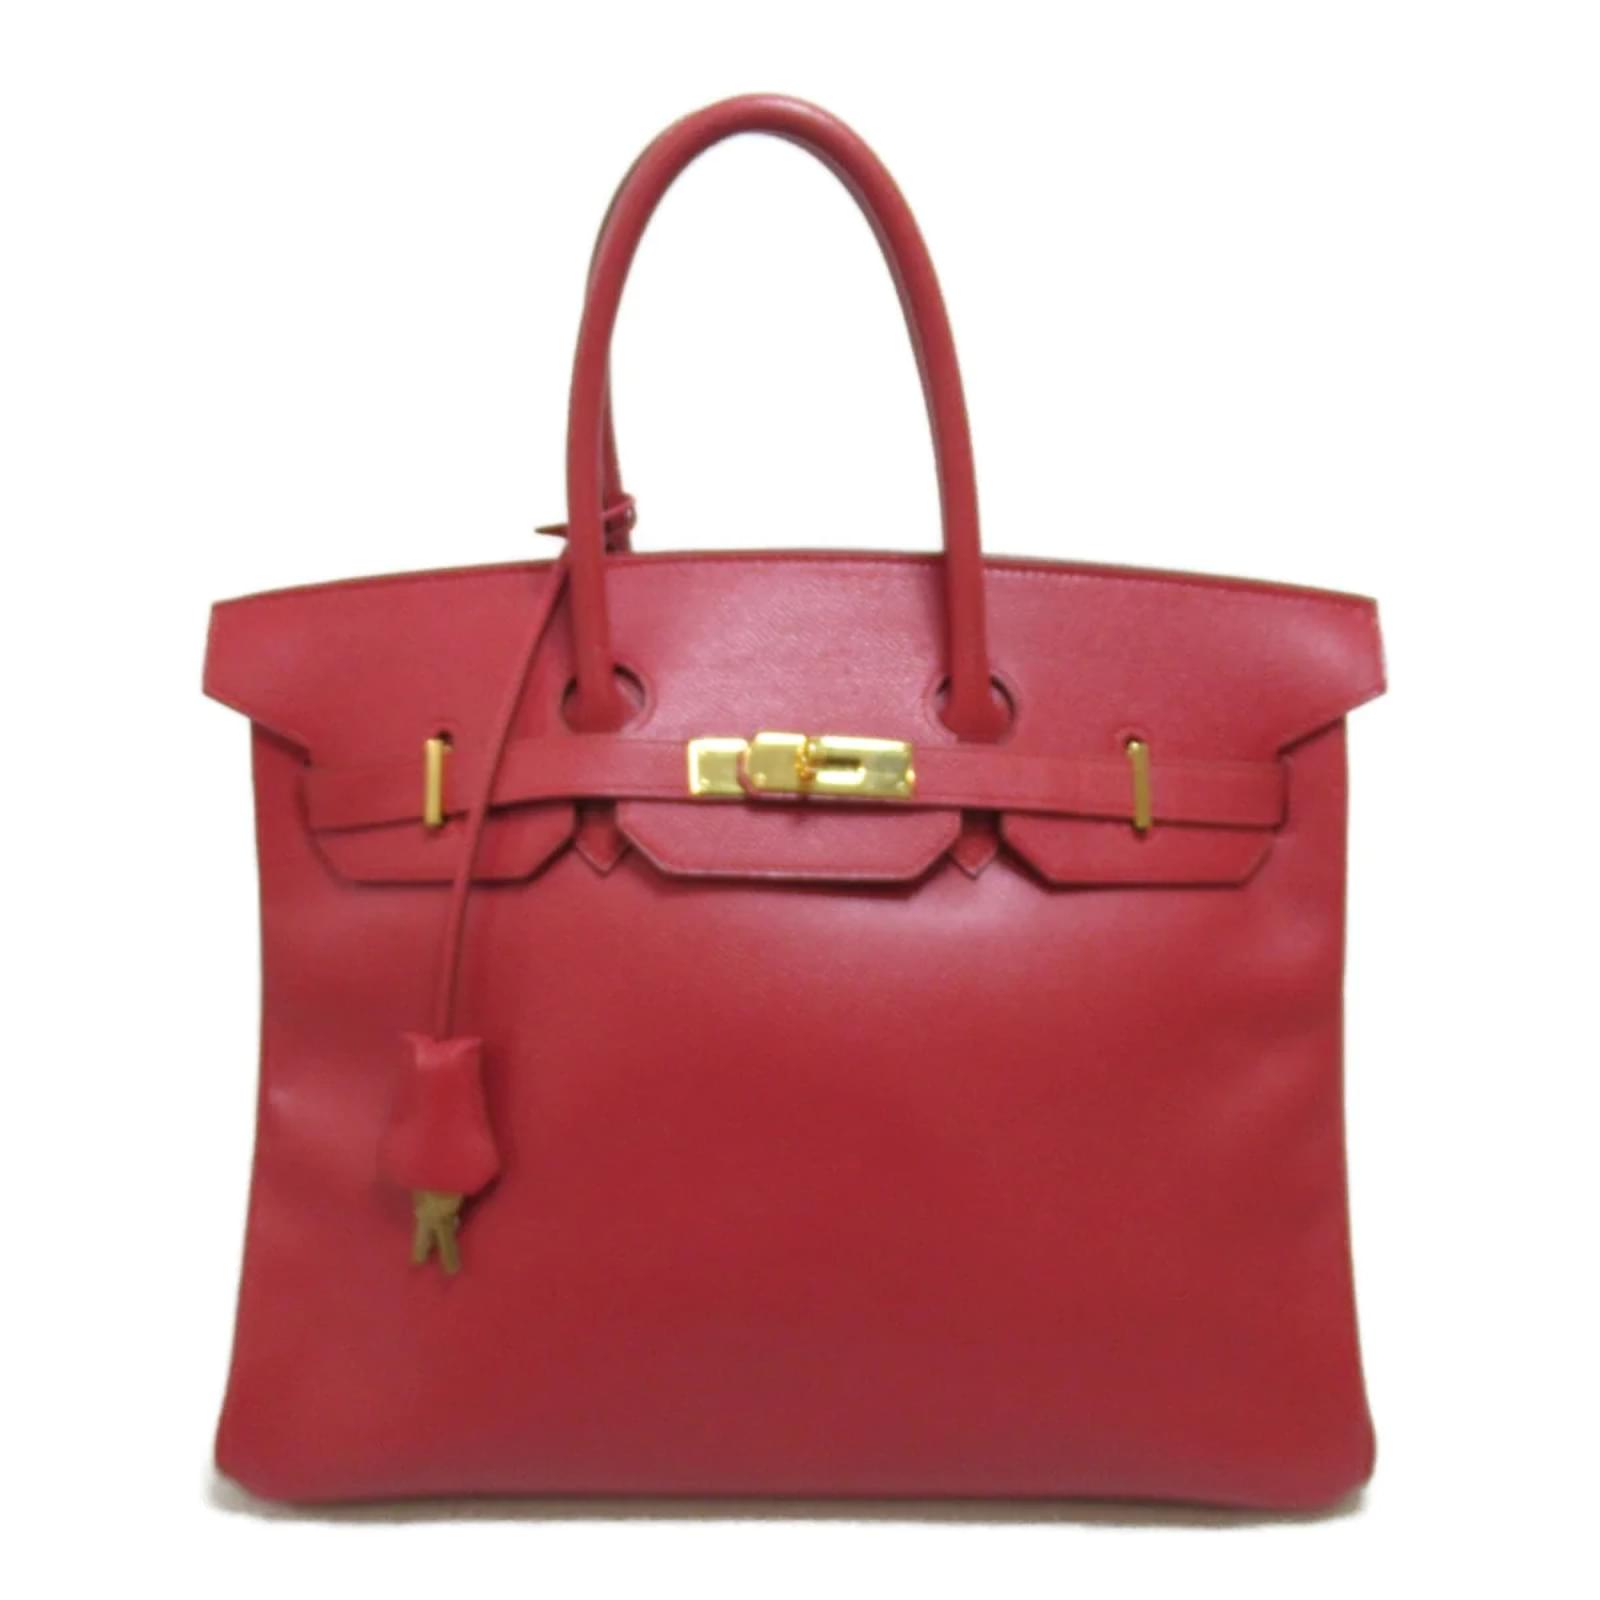 red birkin bag price